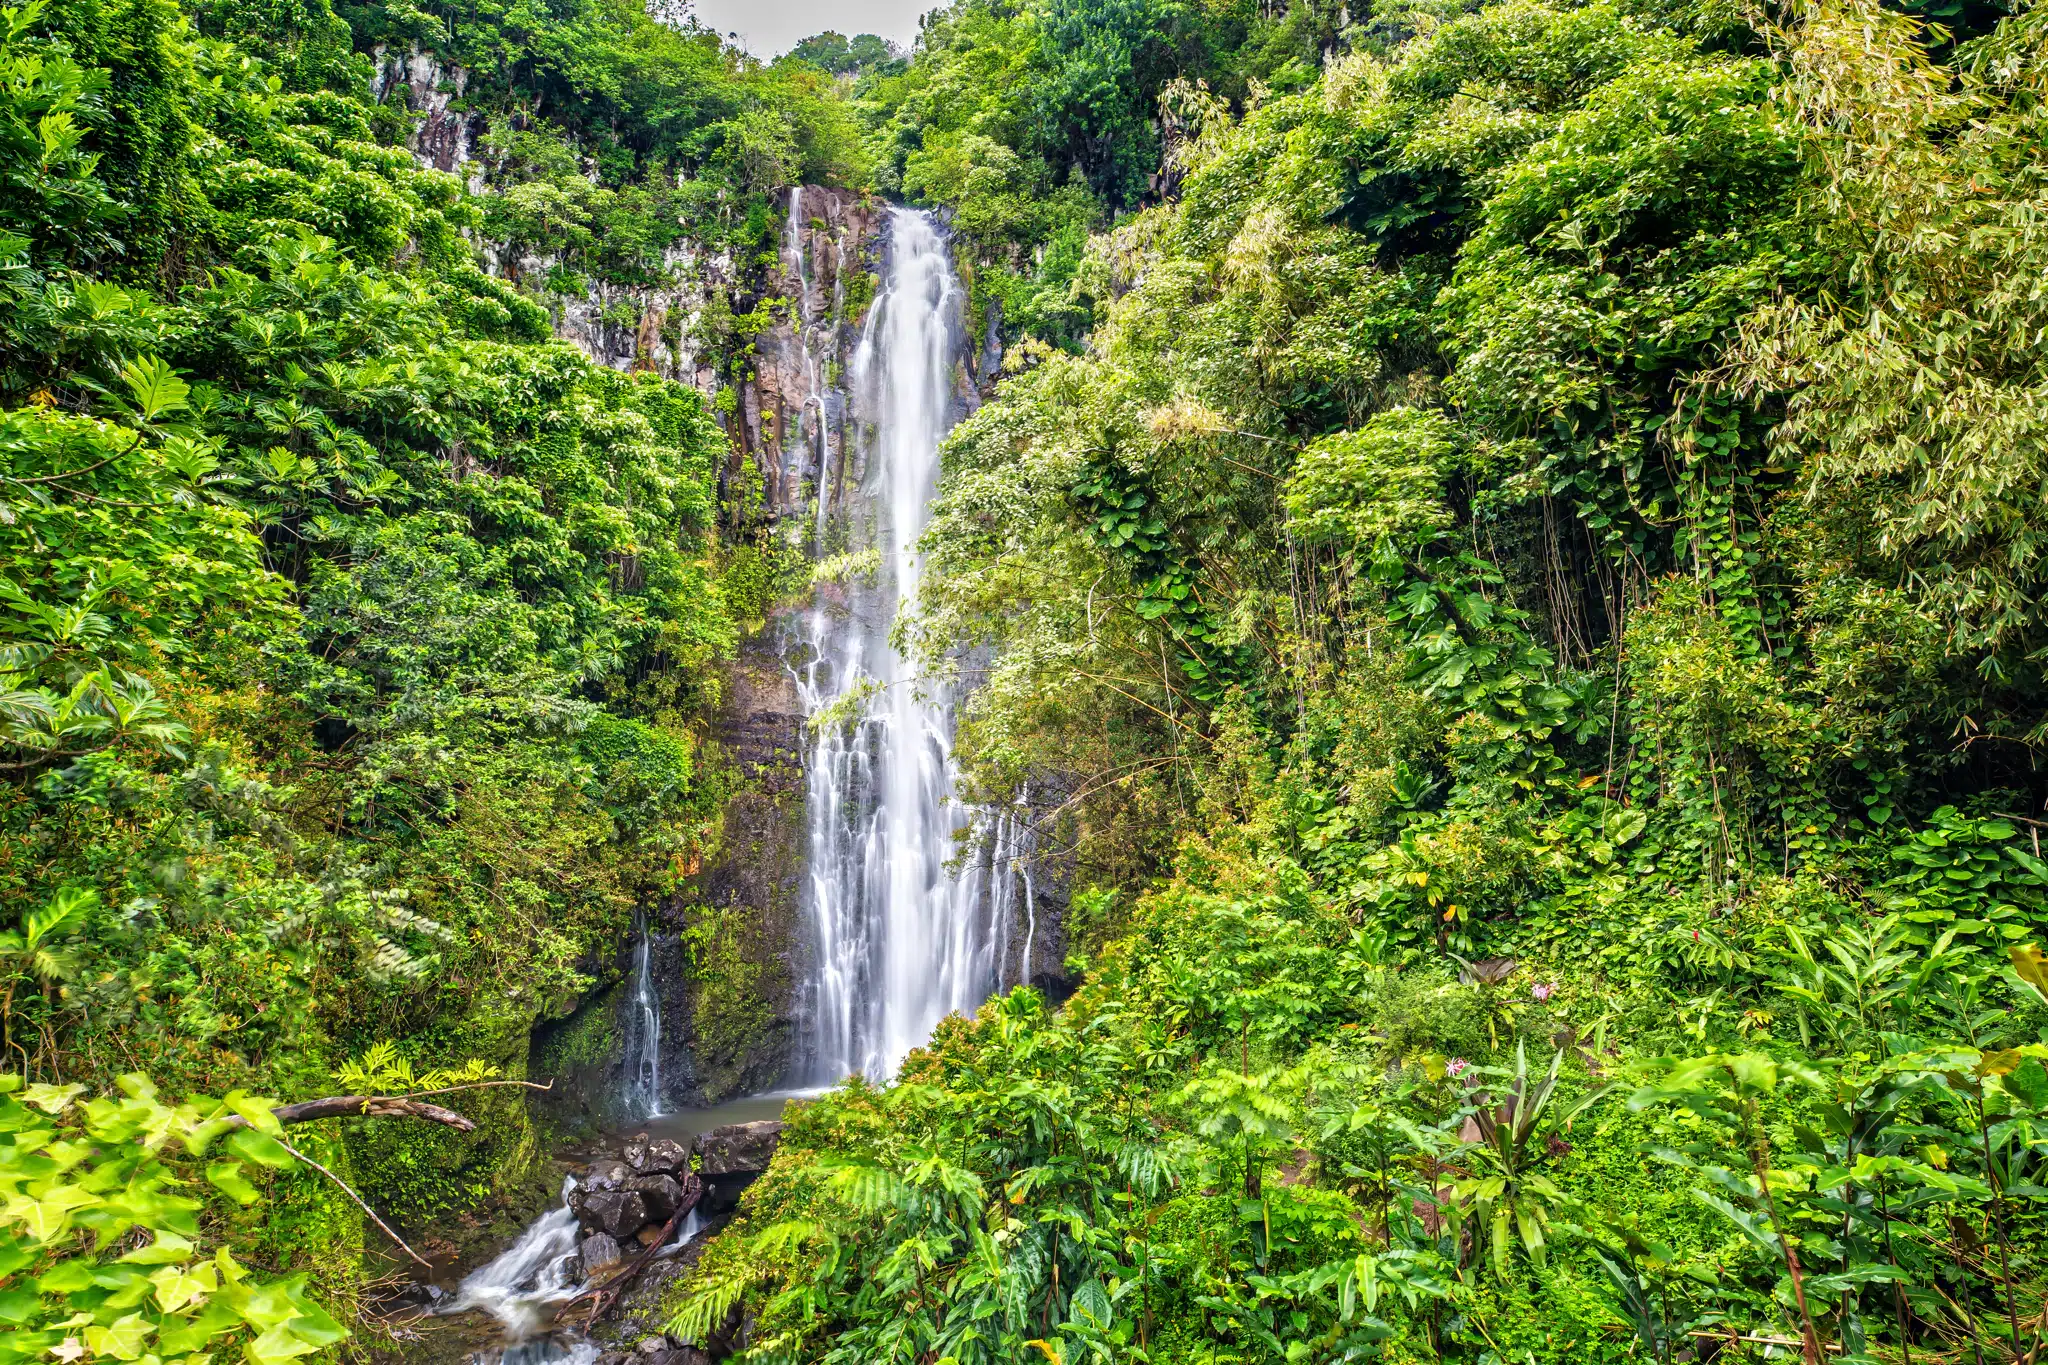 Wailua Falls is a Waterfall located in the city of Hana on Maui, Hawaii